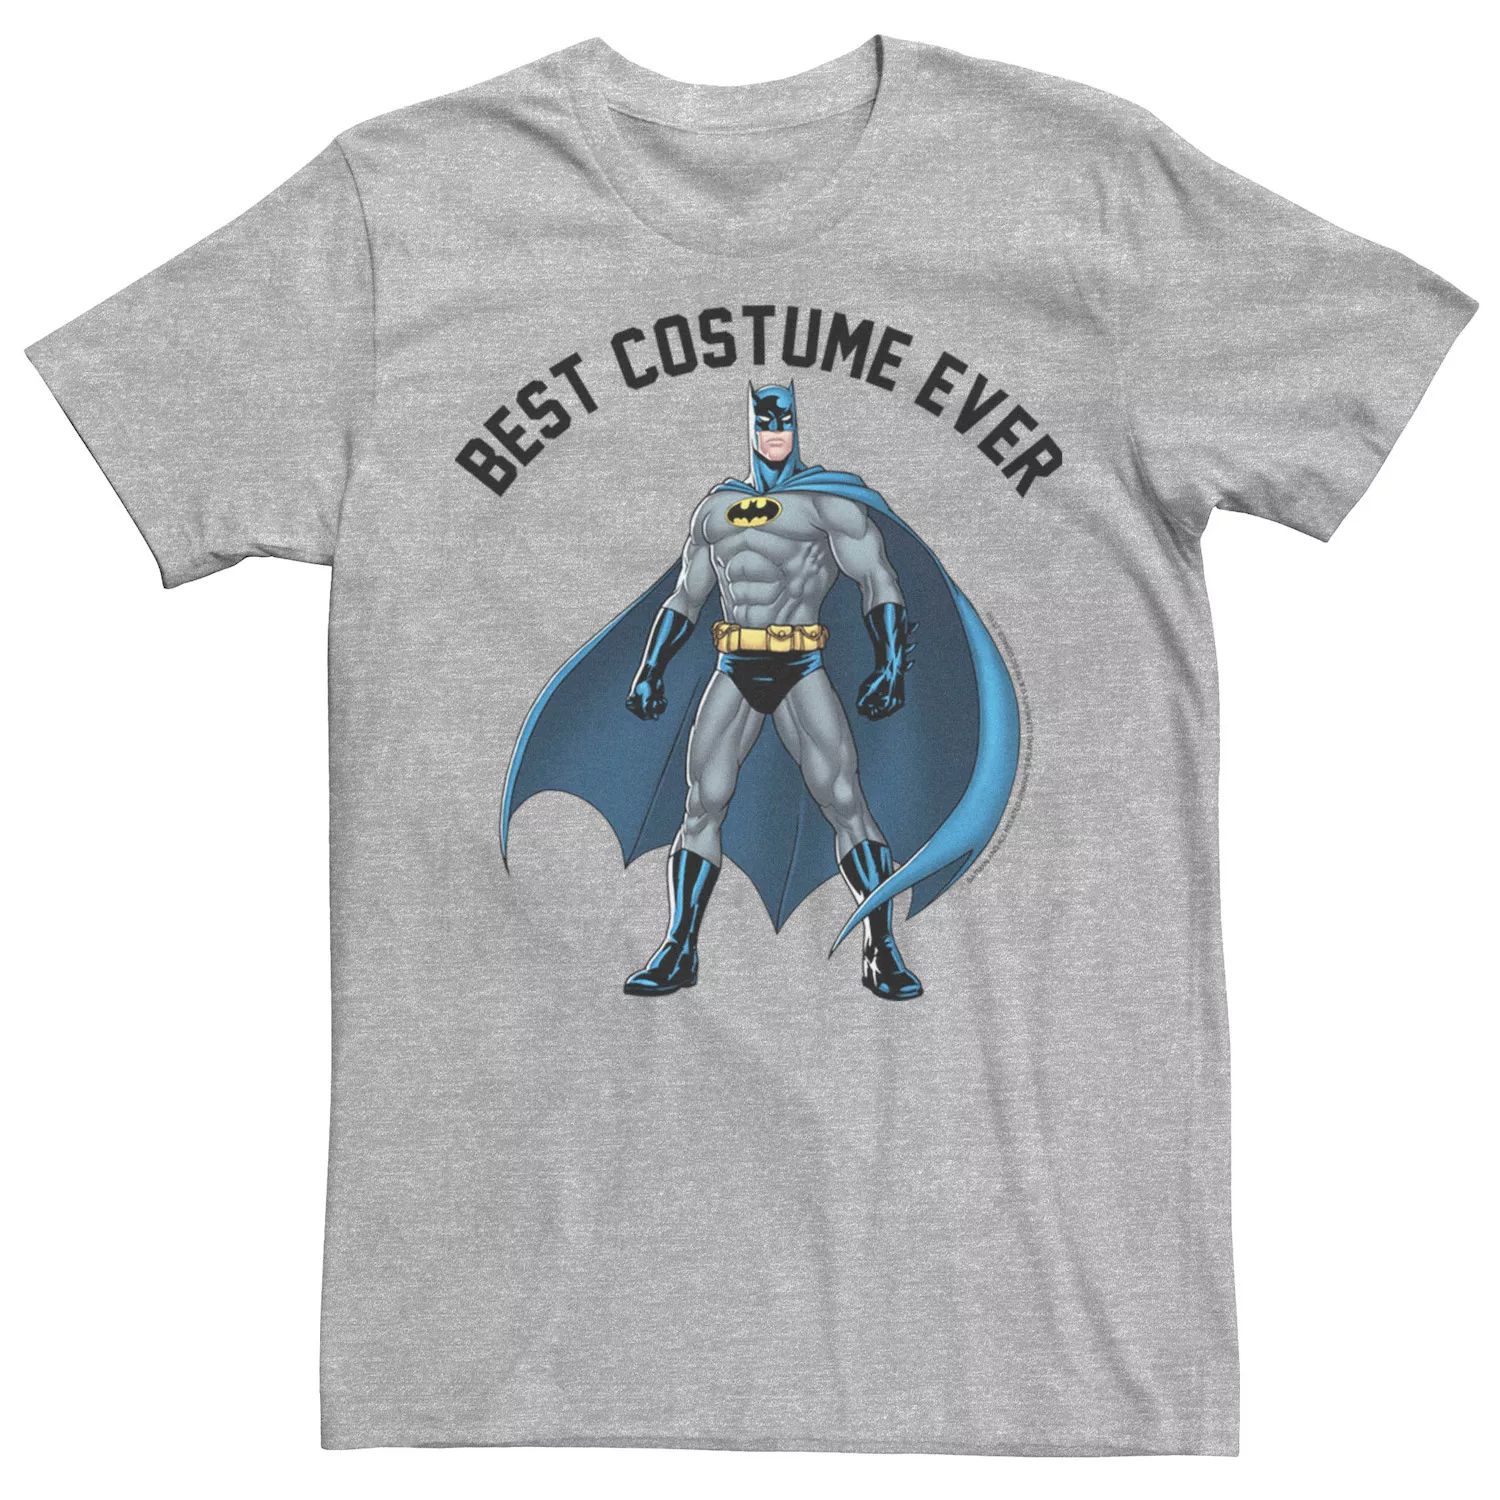 Мужская футболка с лучшим костюмом Бэтмена Licensed Character